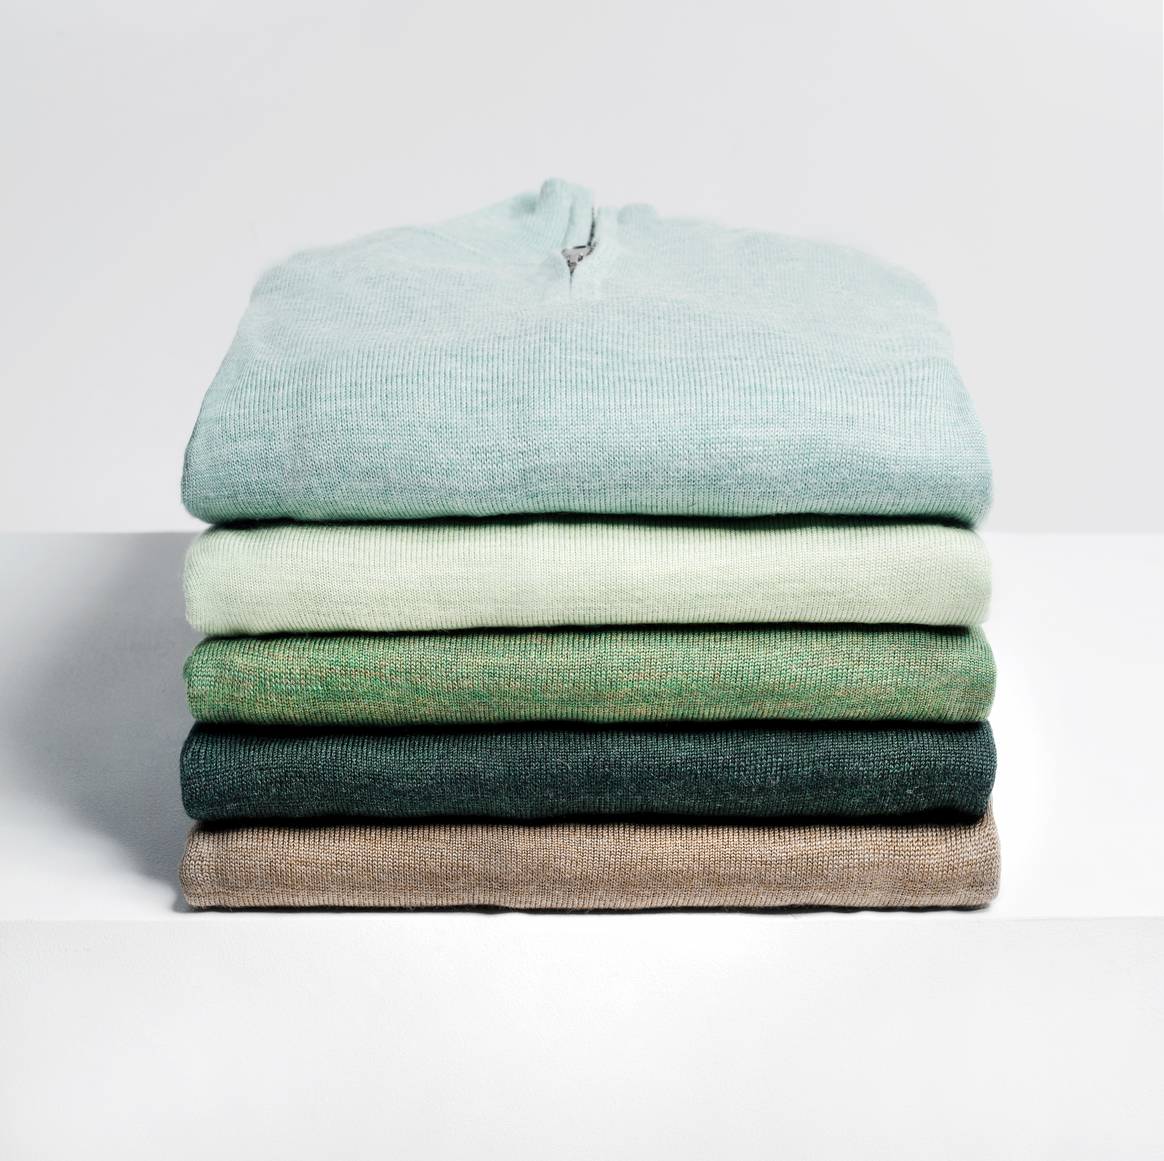 Wool essentials for men, Joe Merino's simple concept. Picture: Joe Merino